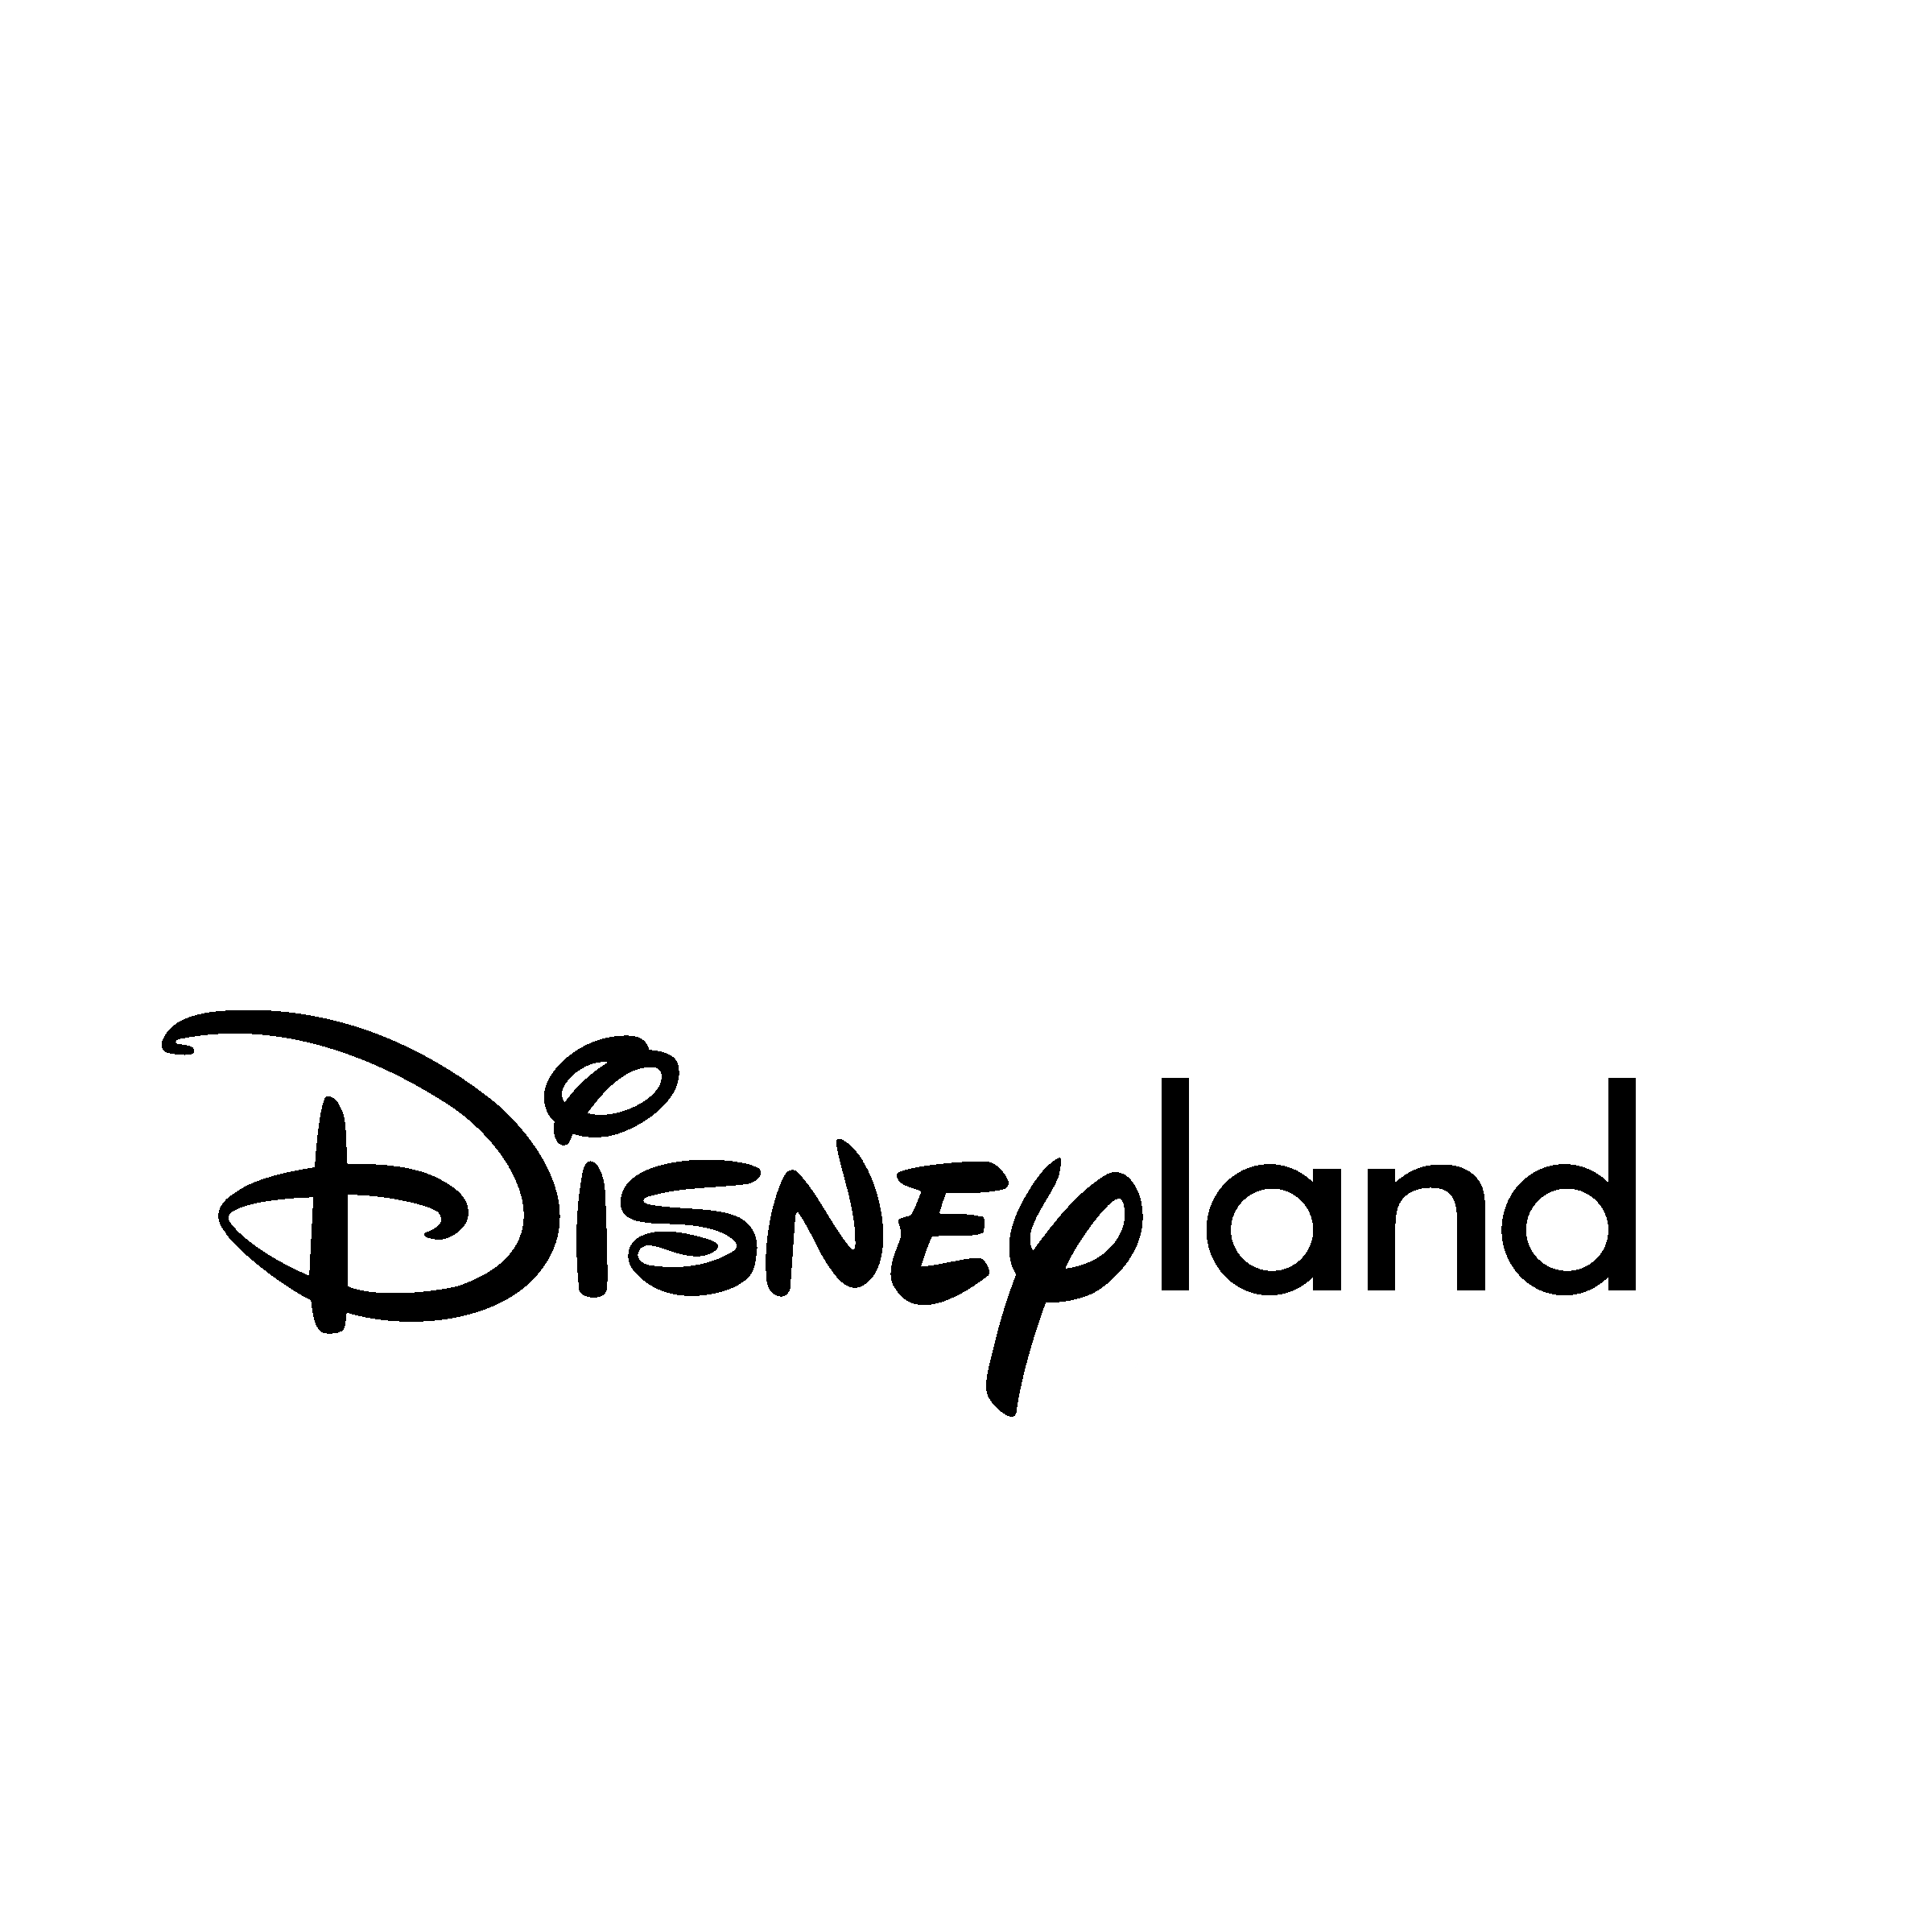 Disneyland Logo - Disneyland Resort Logo PNG Transparent & SVG Vector - Freebie Supply